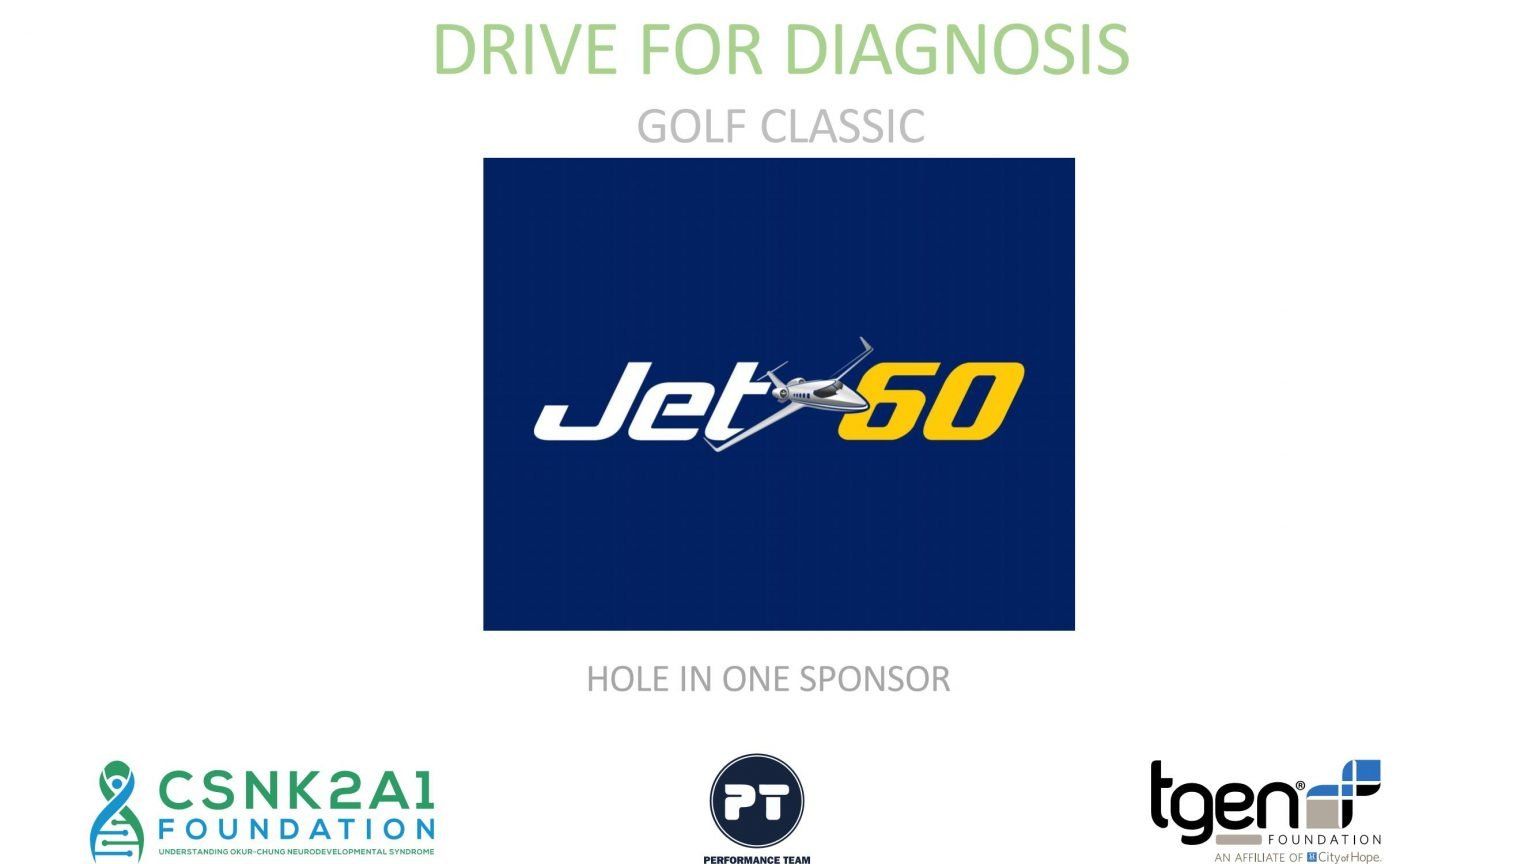 Hole in One Sponsor - Jet 60